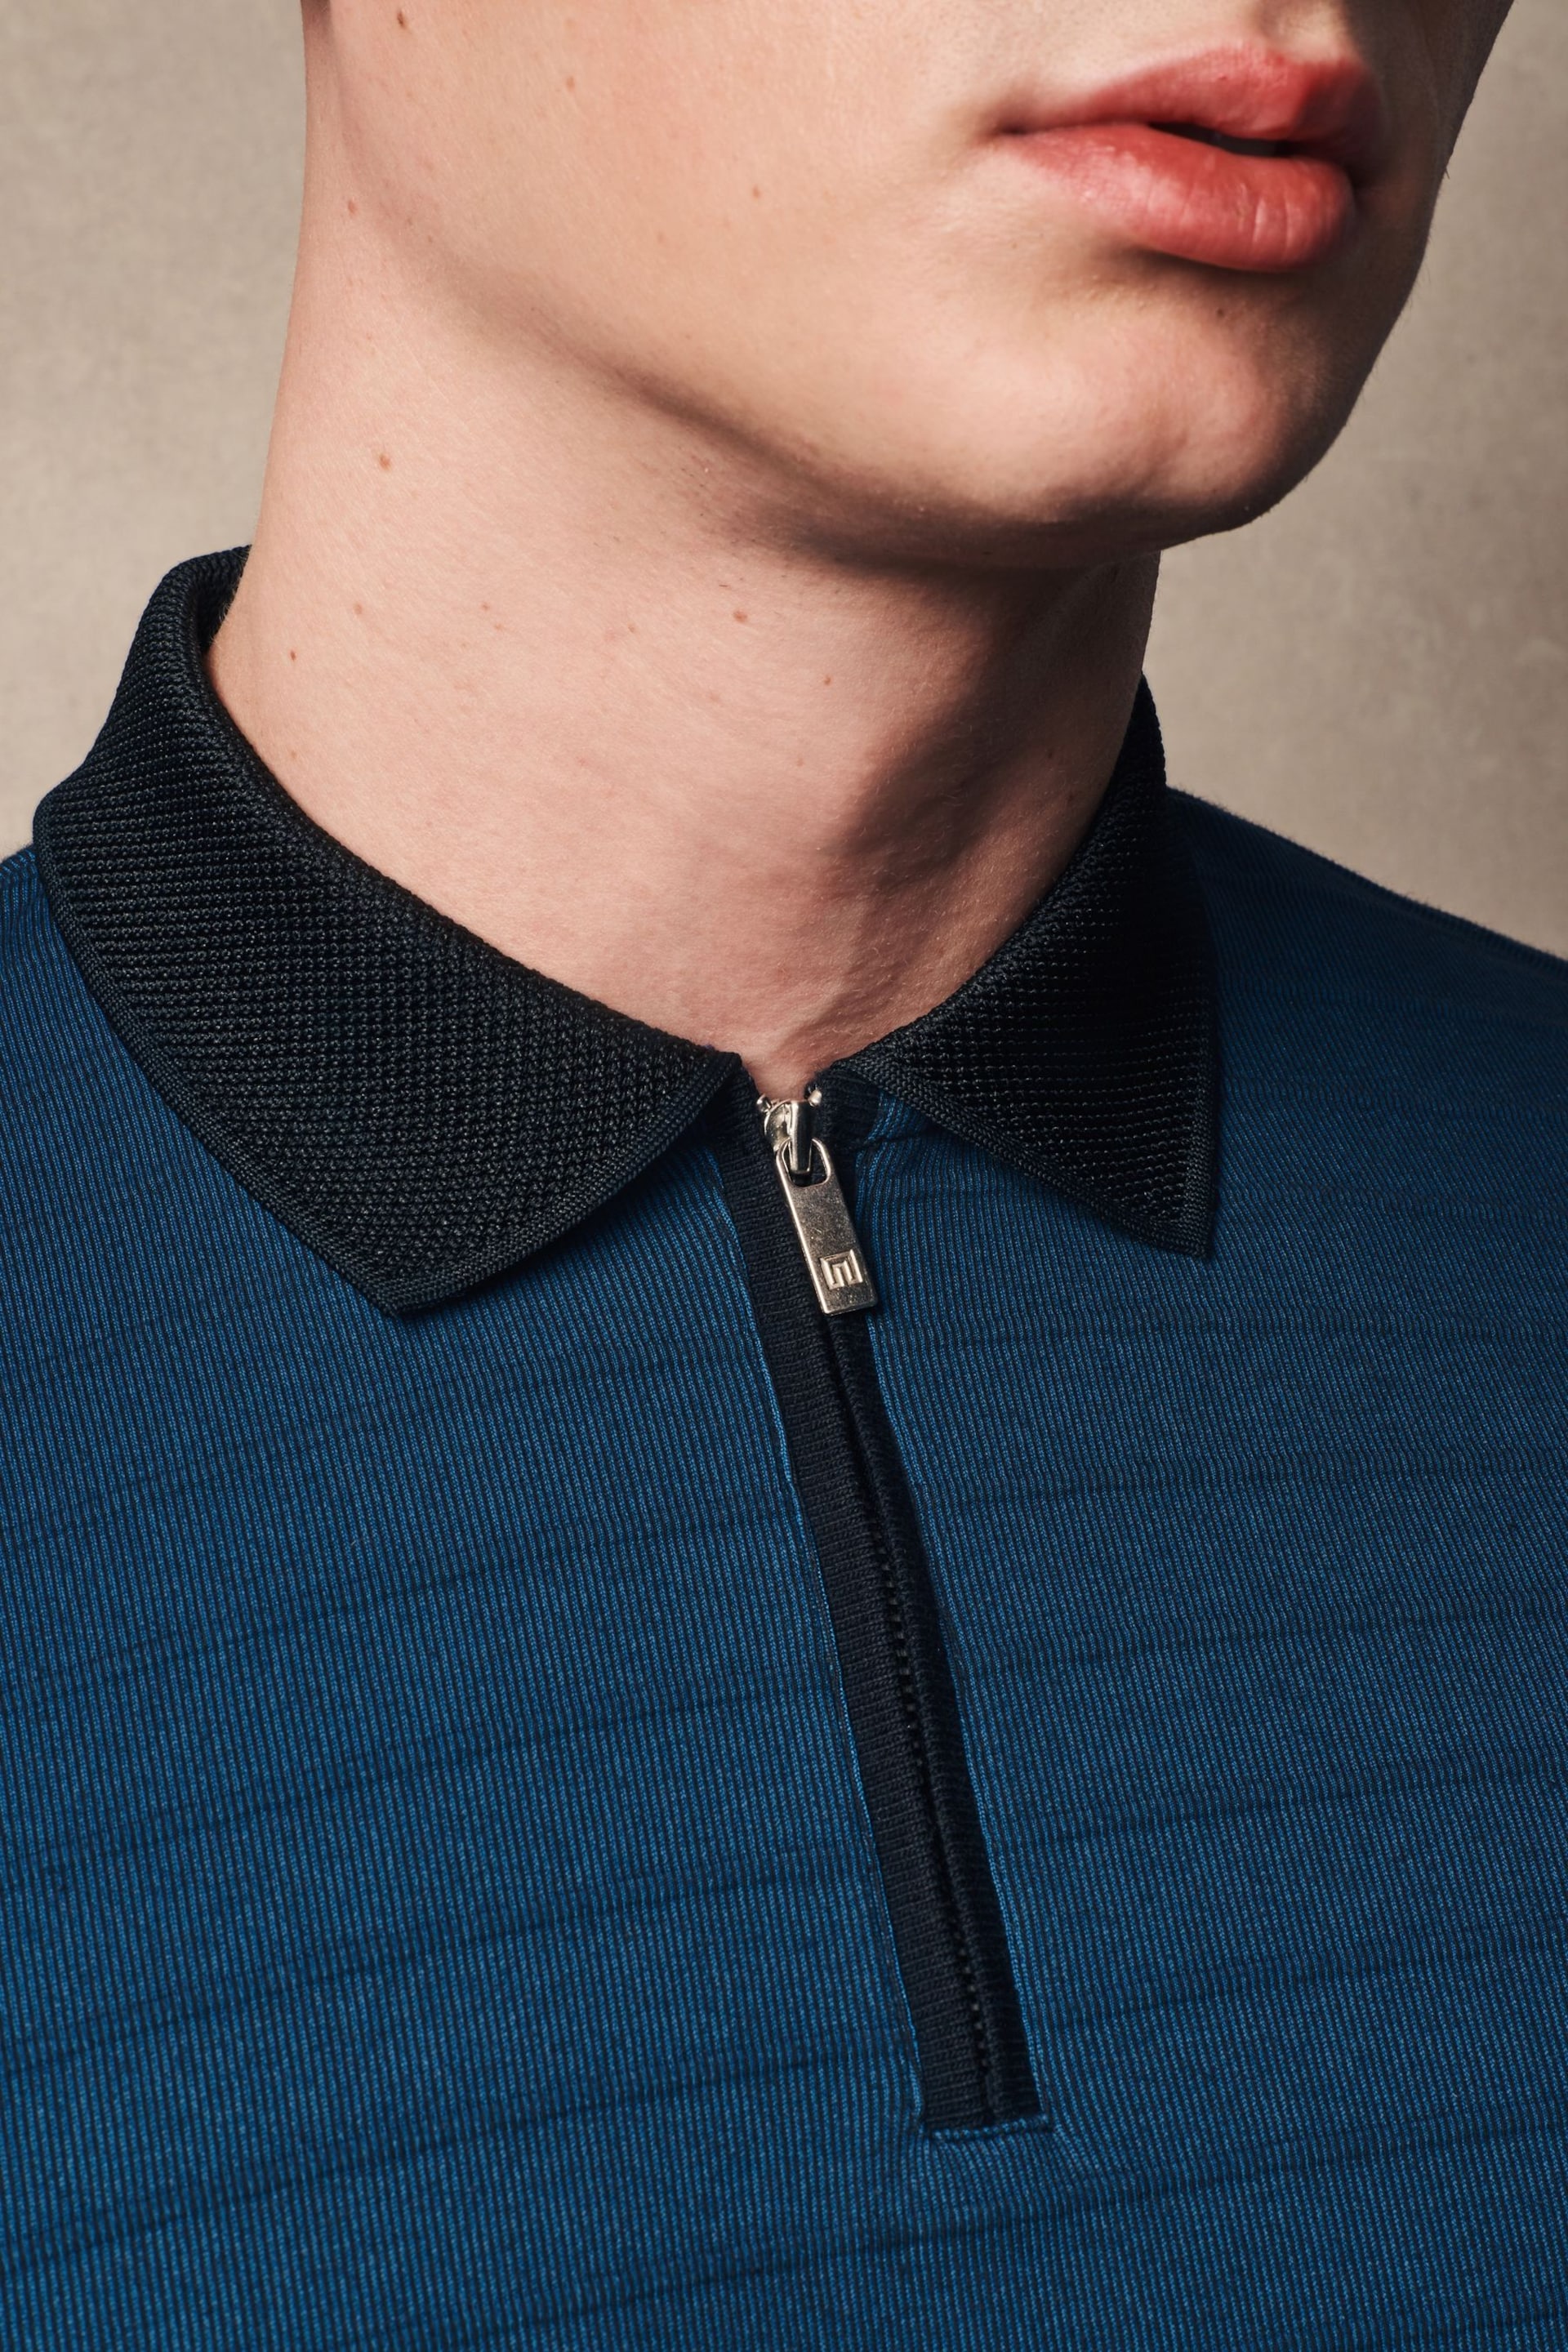 Black/Blue Zip Neck Smart Polo Shirt - Image 5 of 9